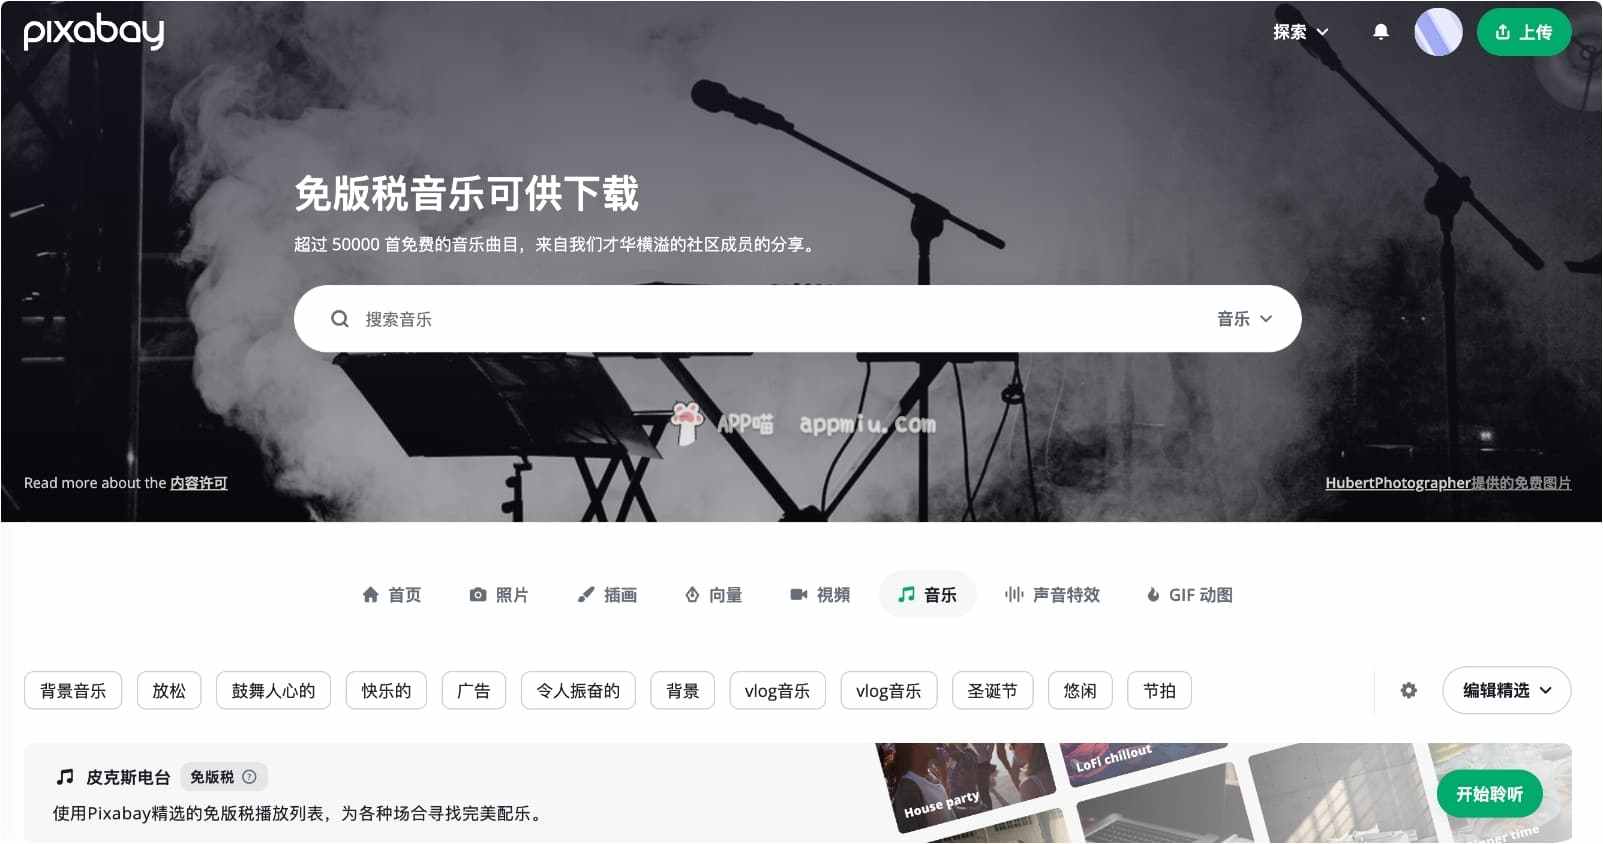 pixabay：免版税可商用视频音乐图片下载网站，支持中文-APP喵-阿喵软件